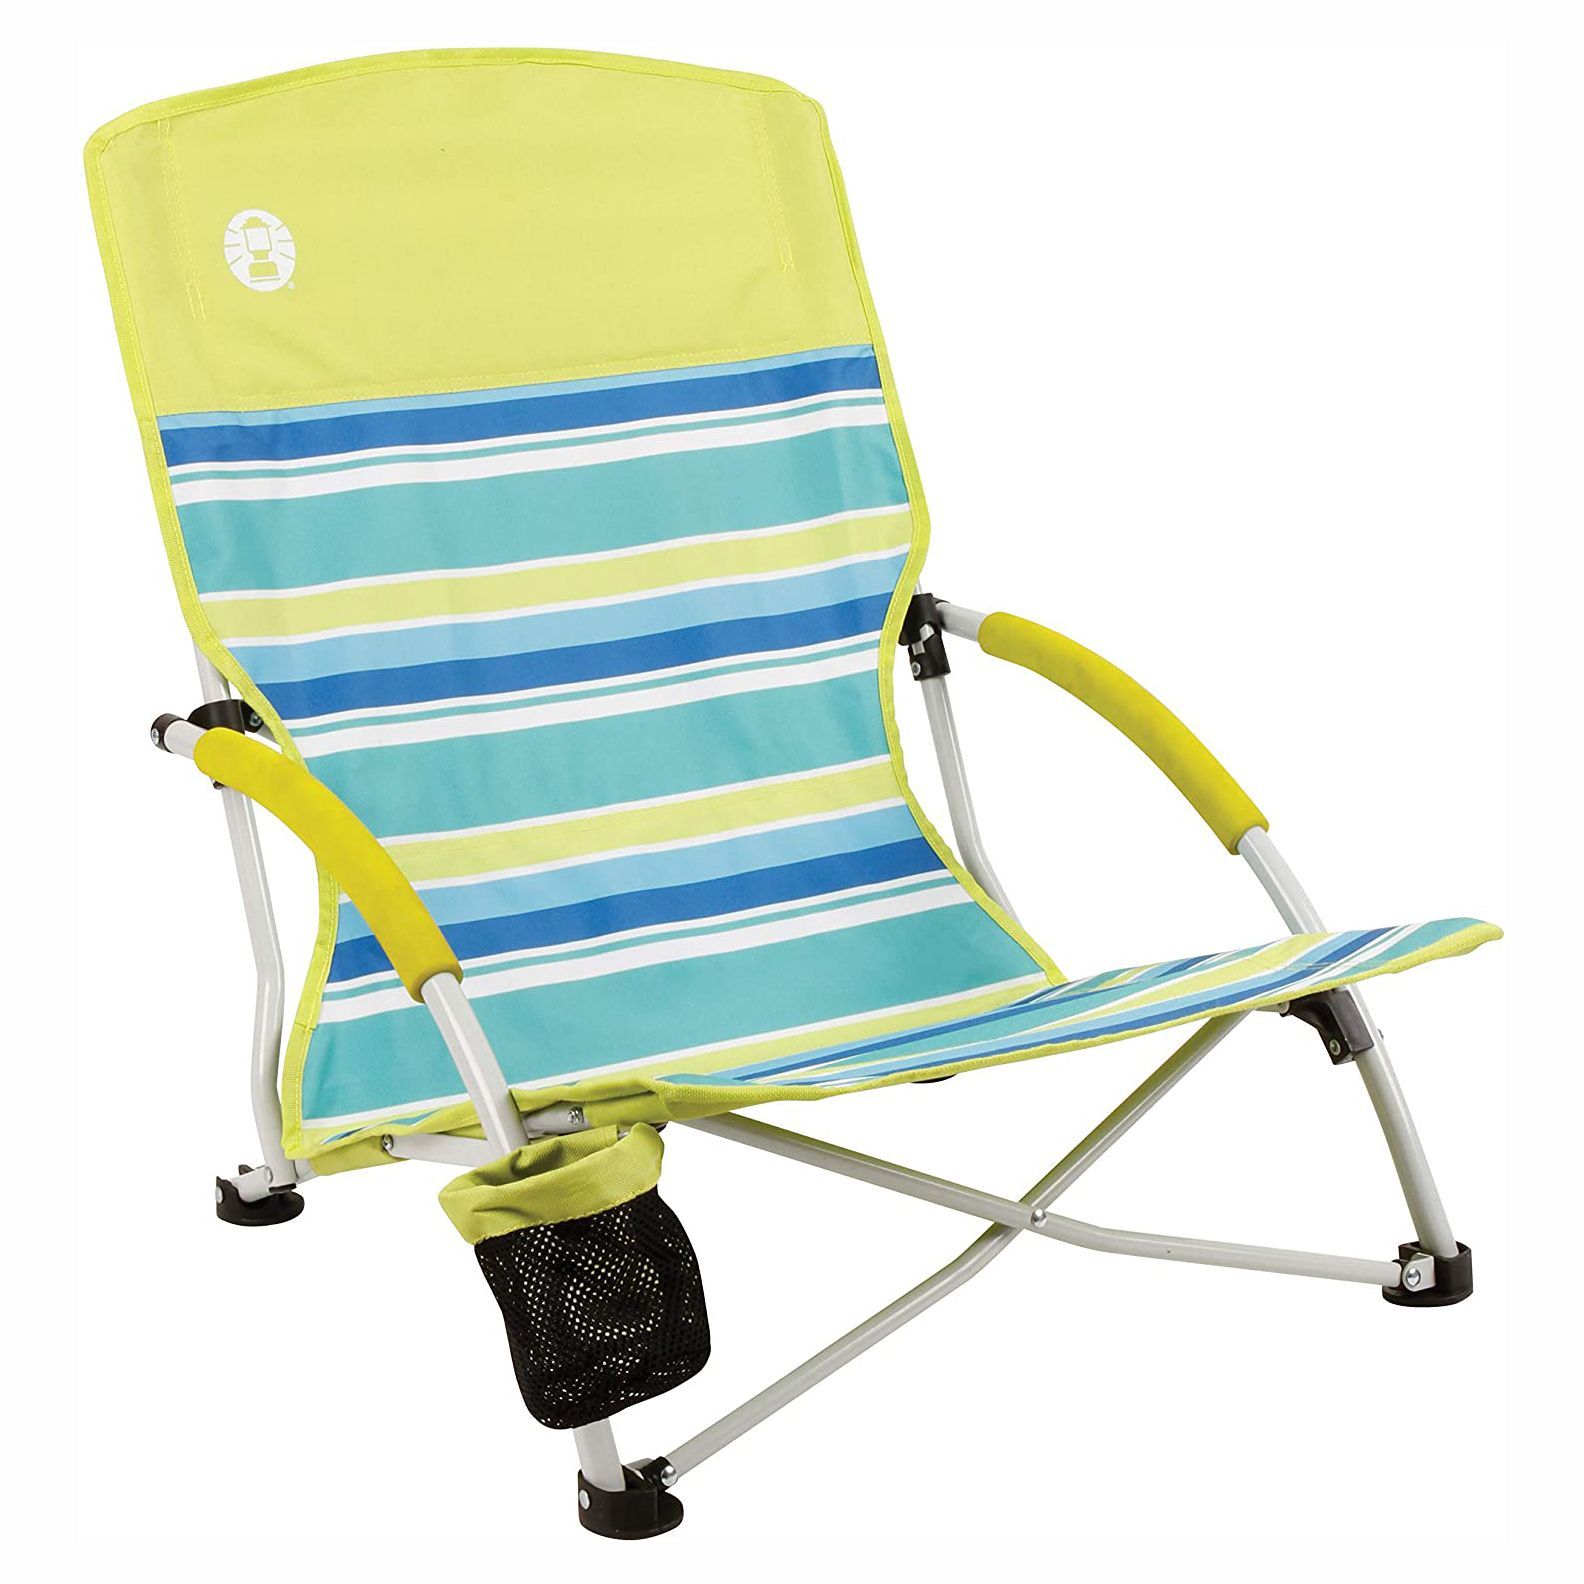 10 Best Beach Chairs 2022 – Reviews of Beach Chairs